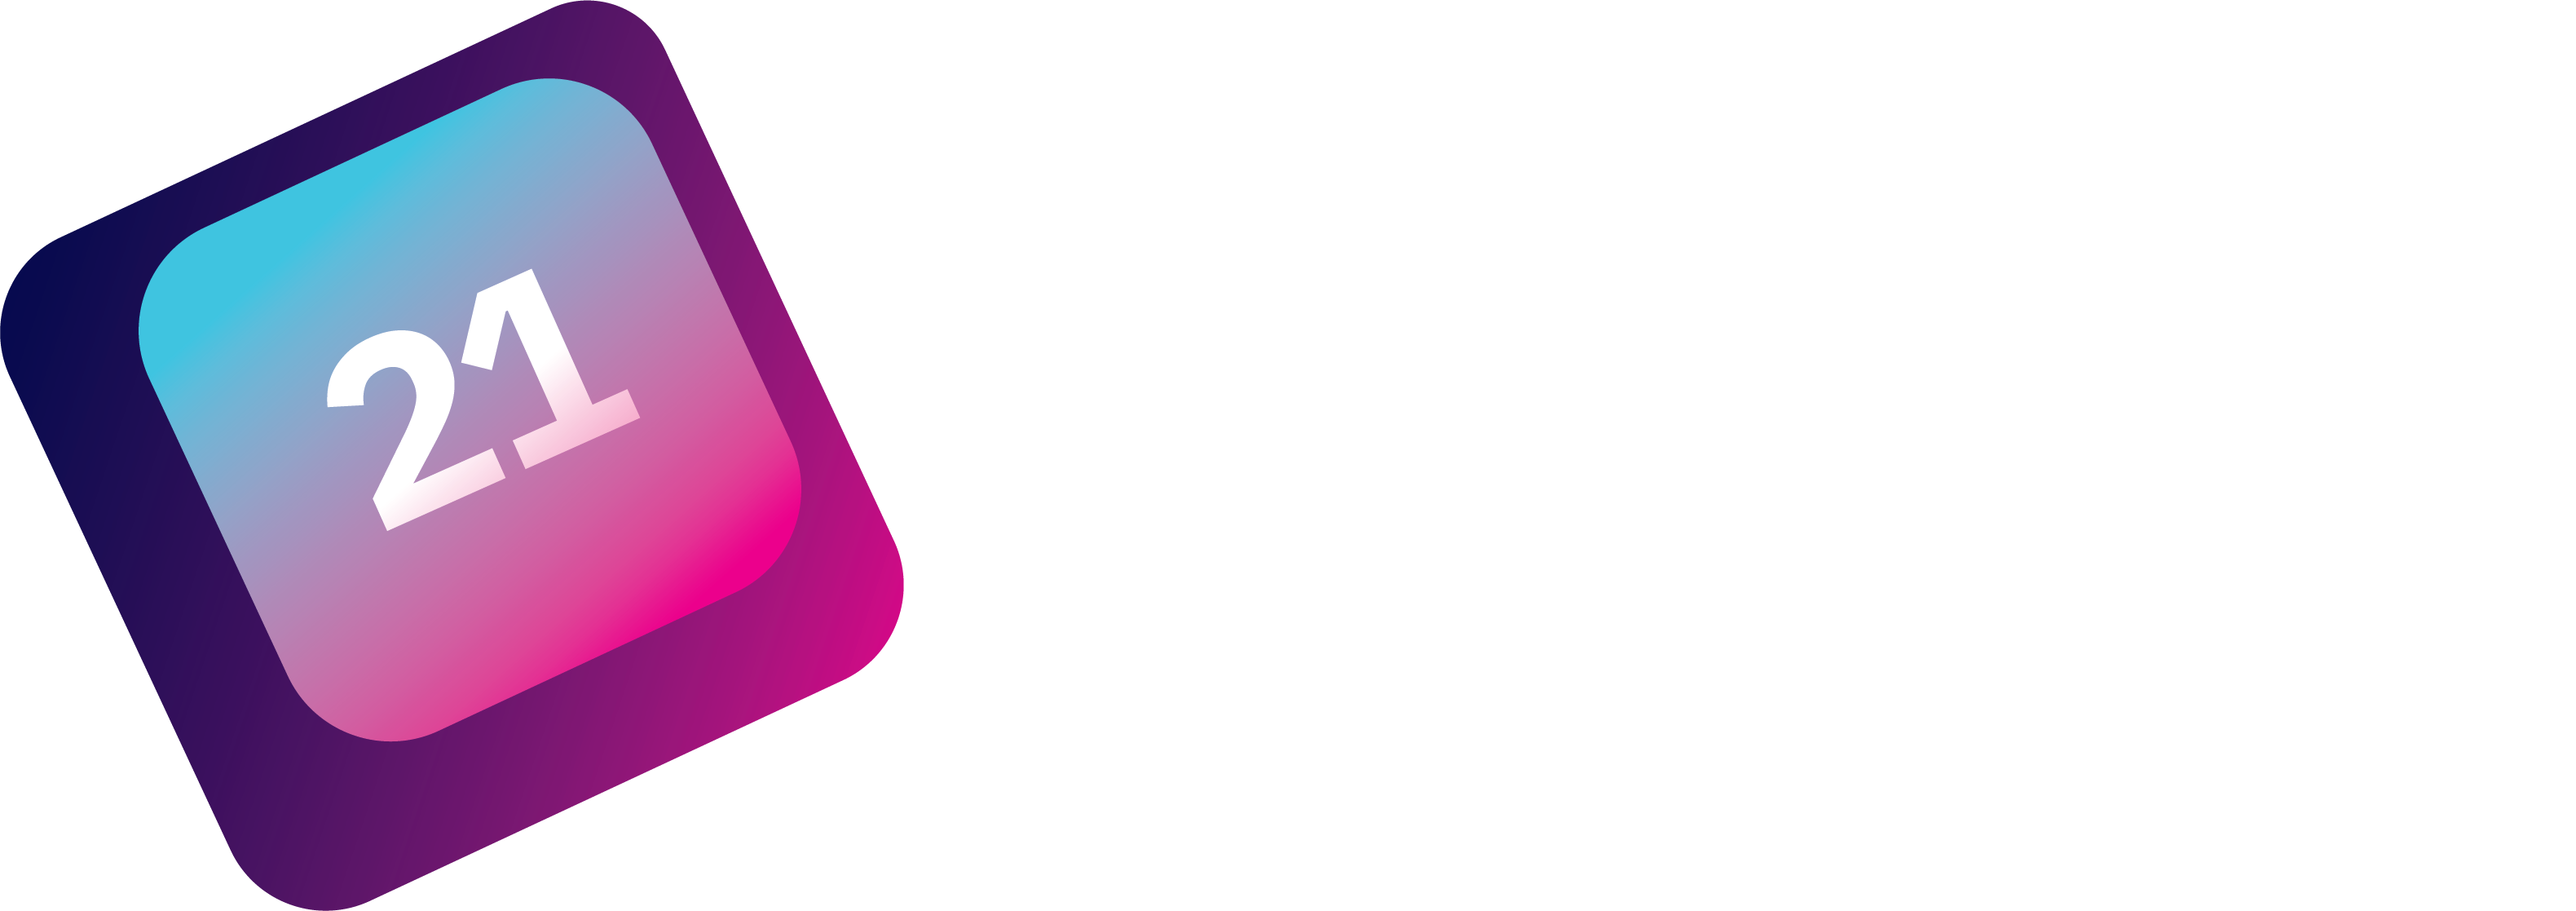 logotipo tecla21